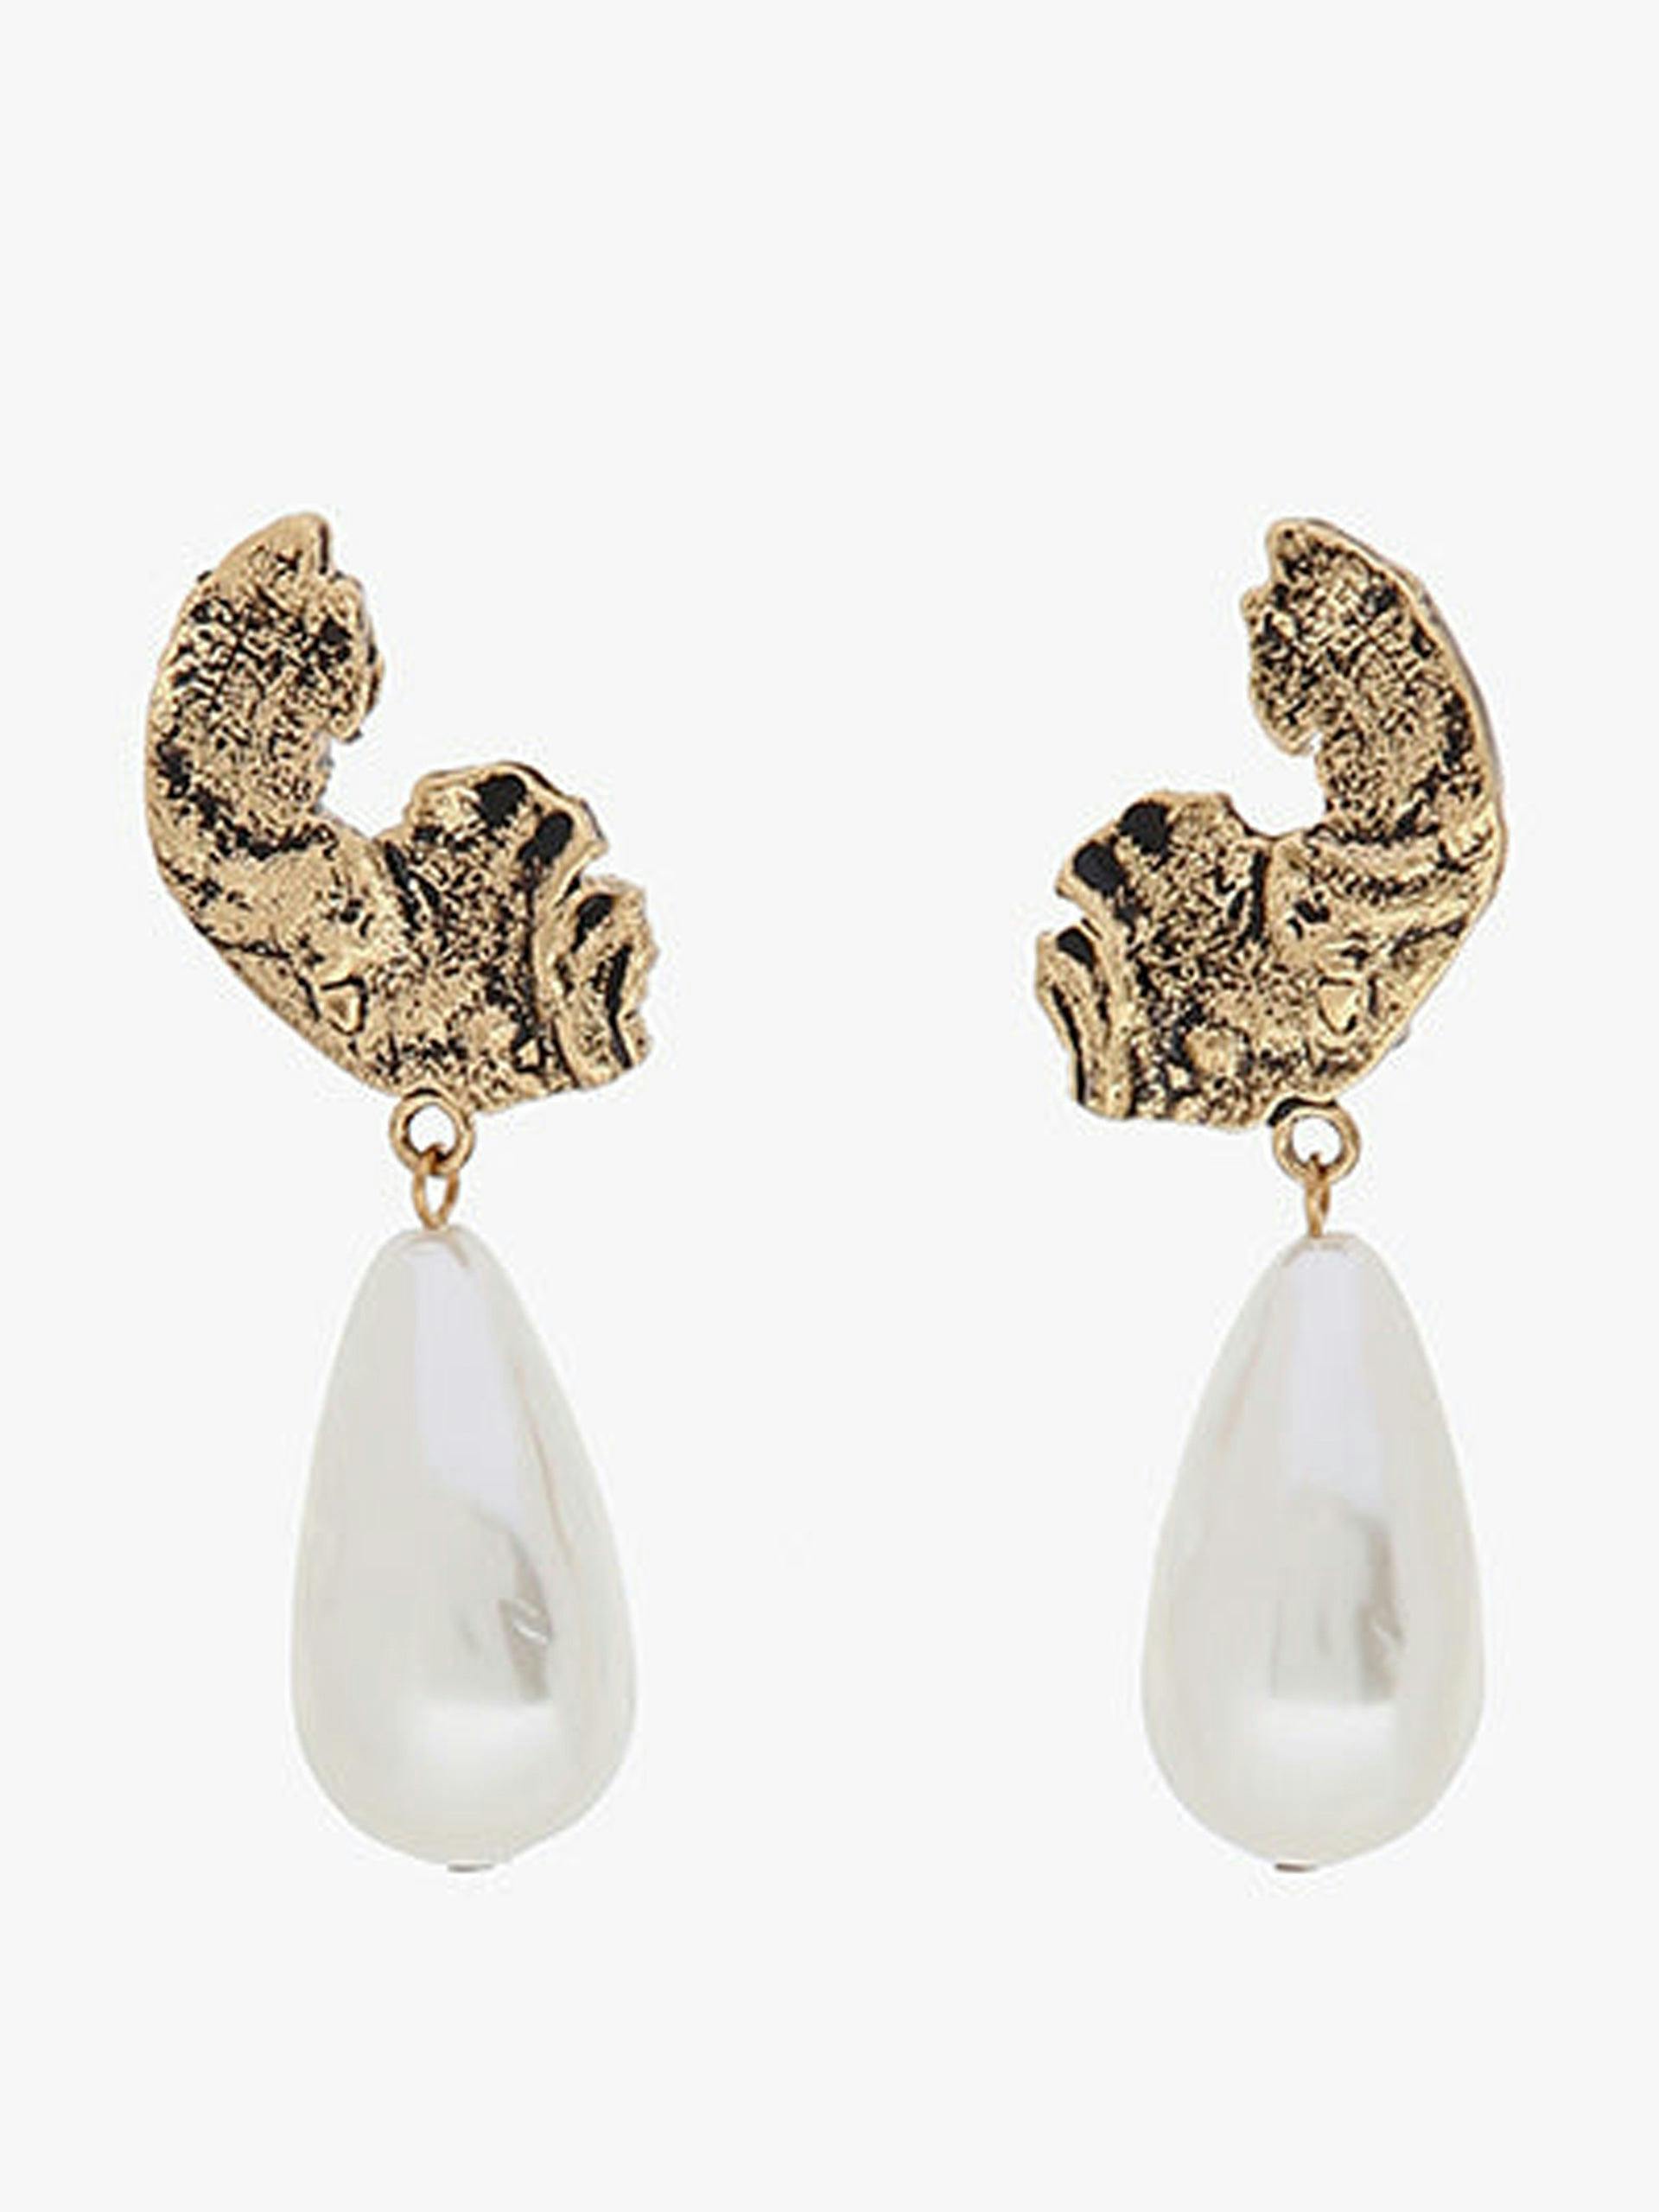 Antique pearl drop gold stud earrings